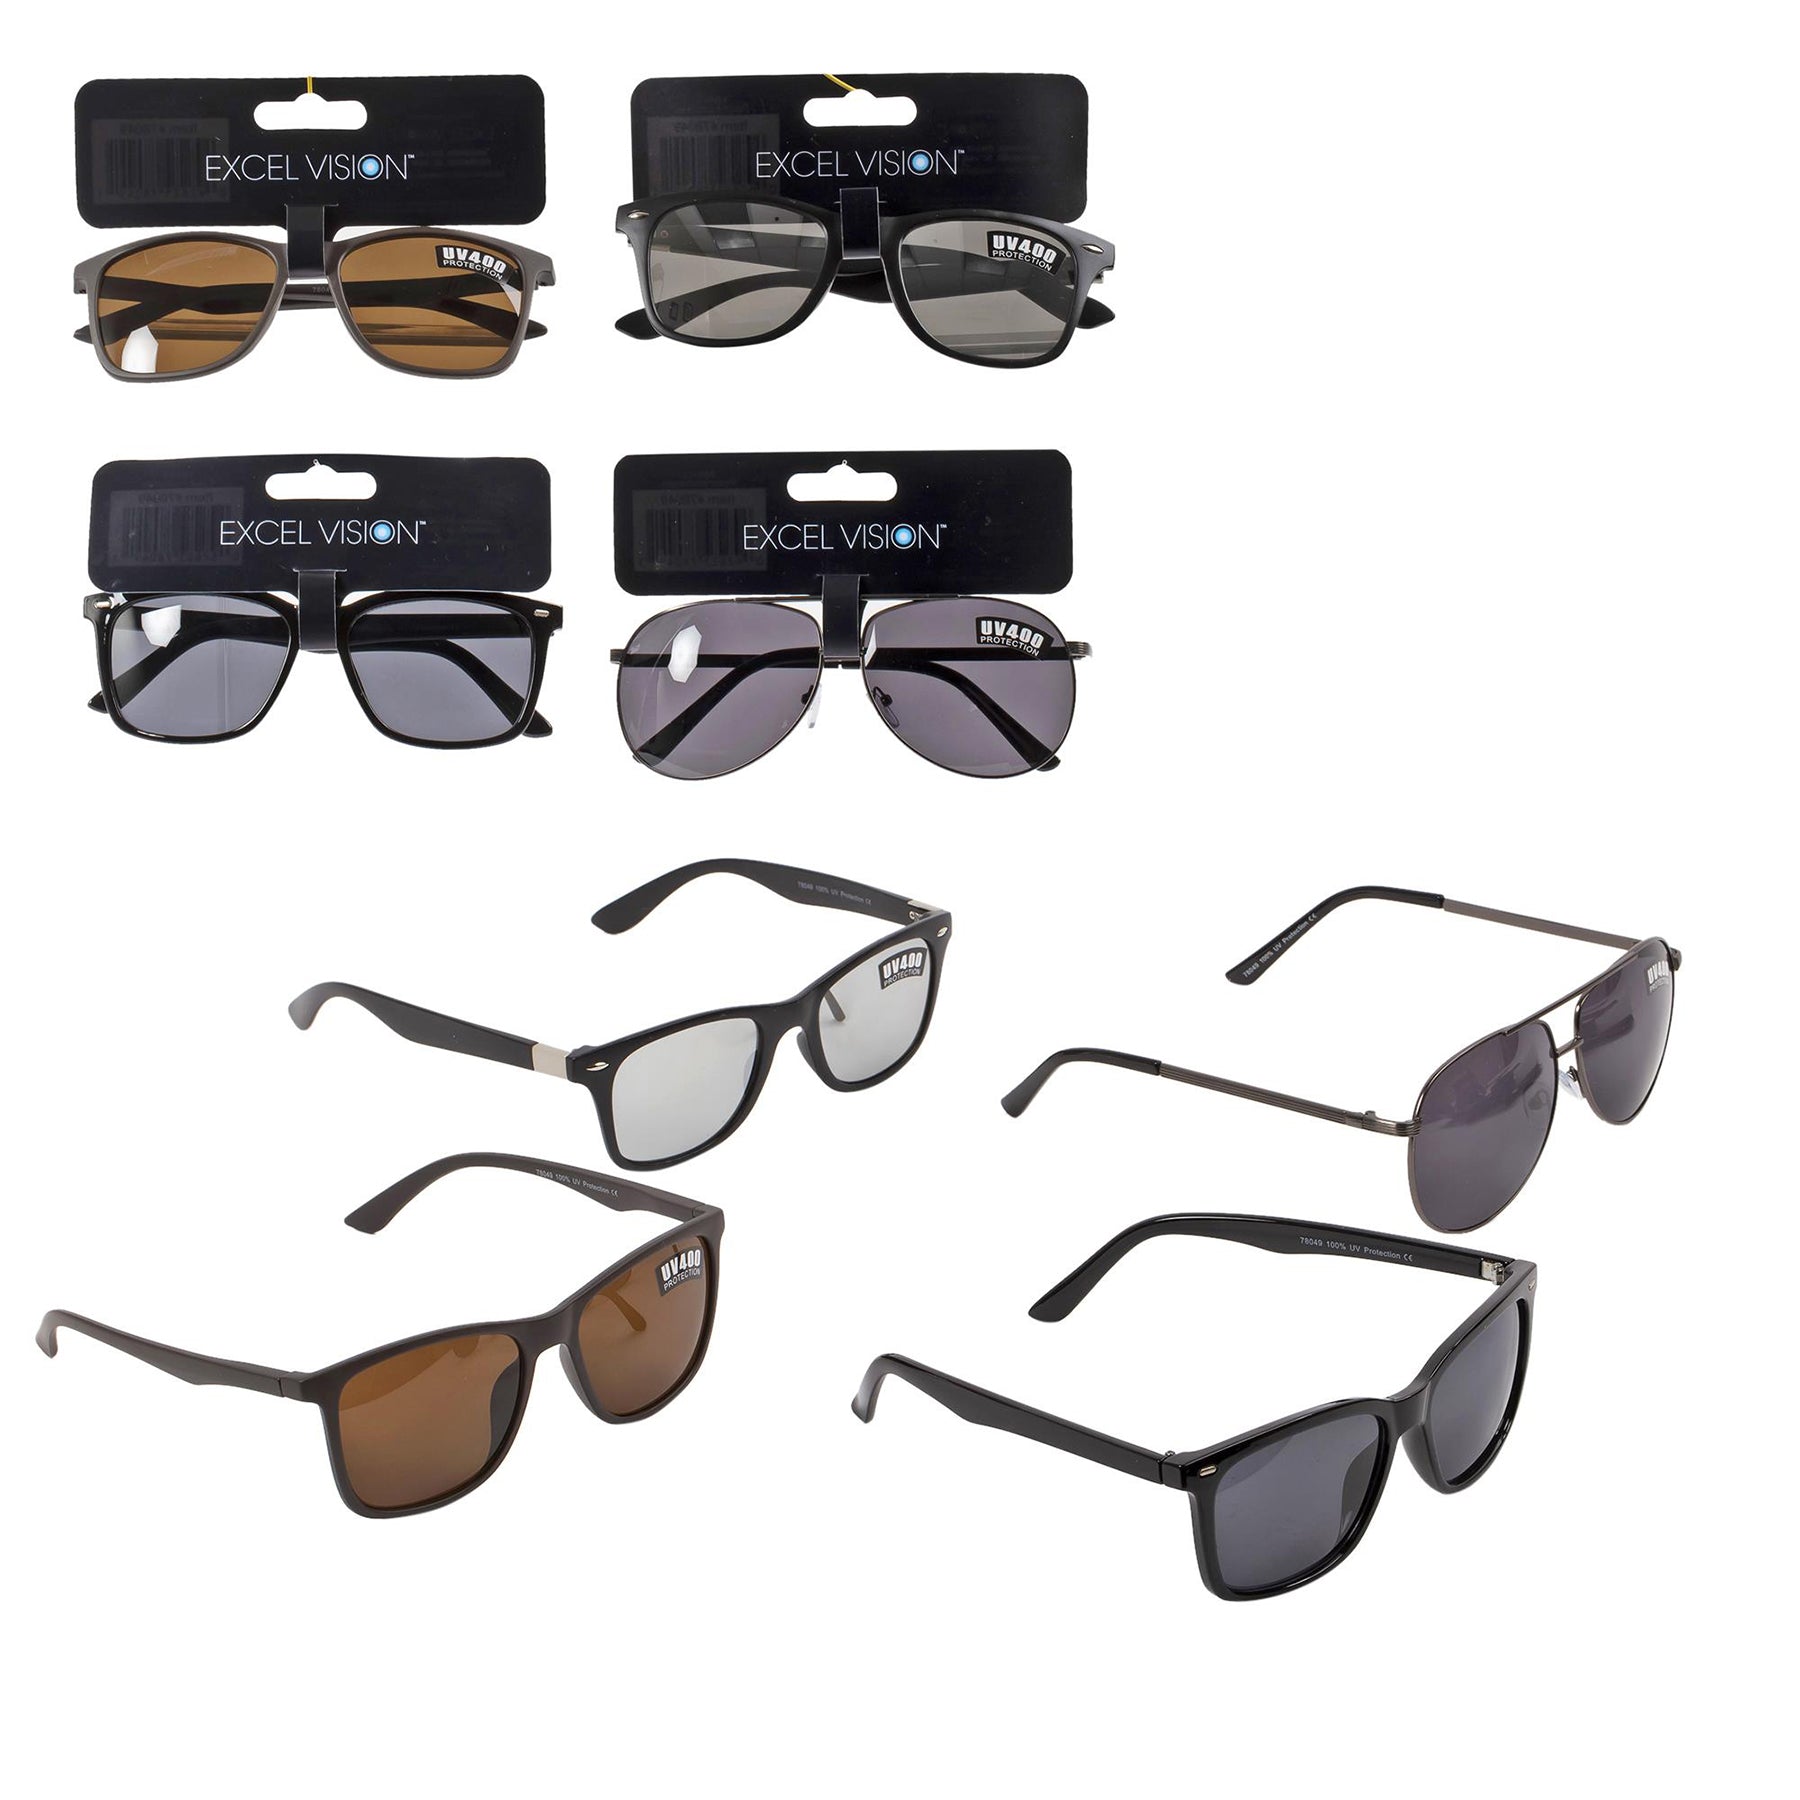 Excel Vision Men's Sunglasses